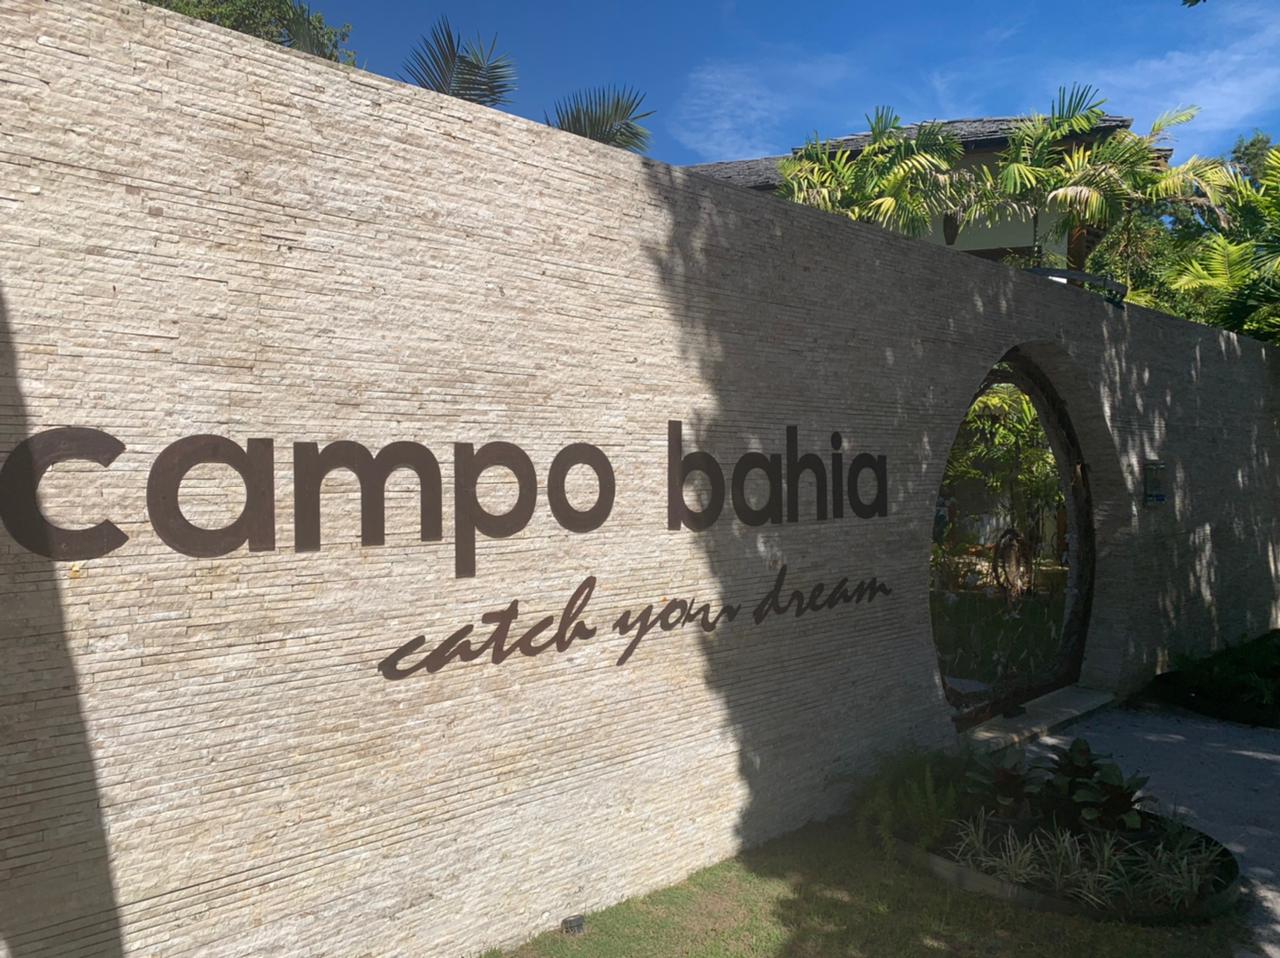 Campo Bahia Hotel